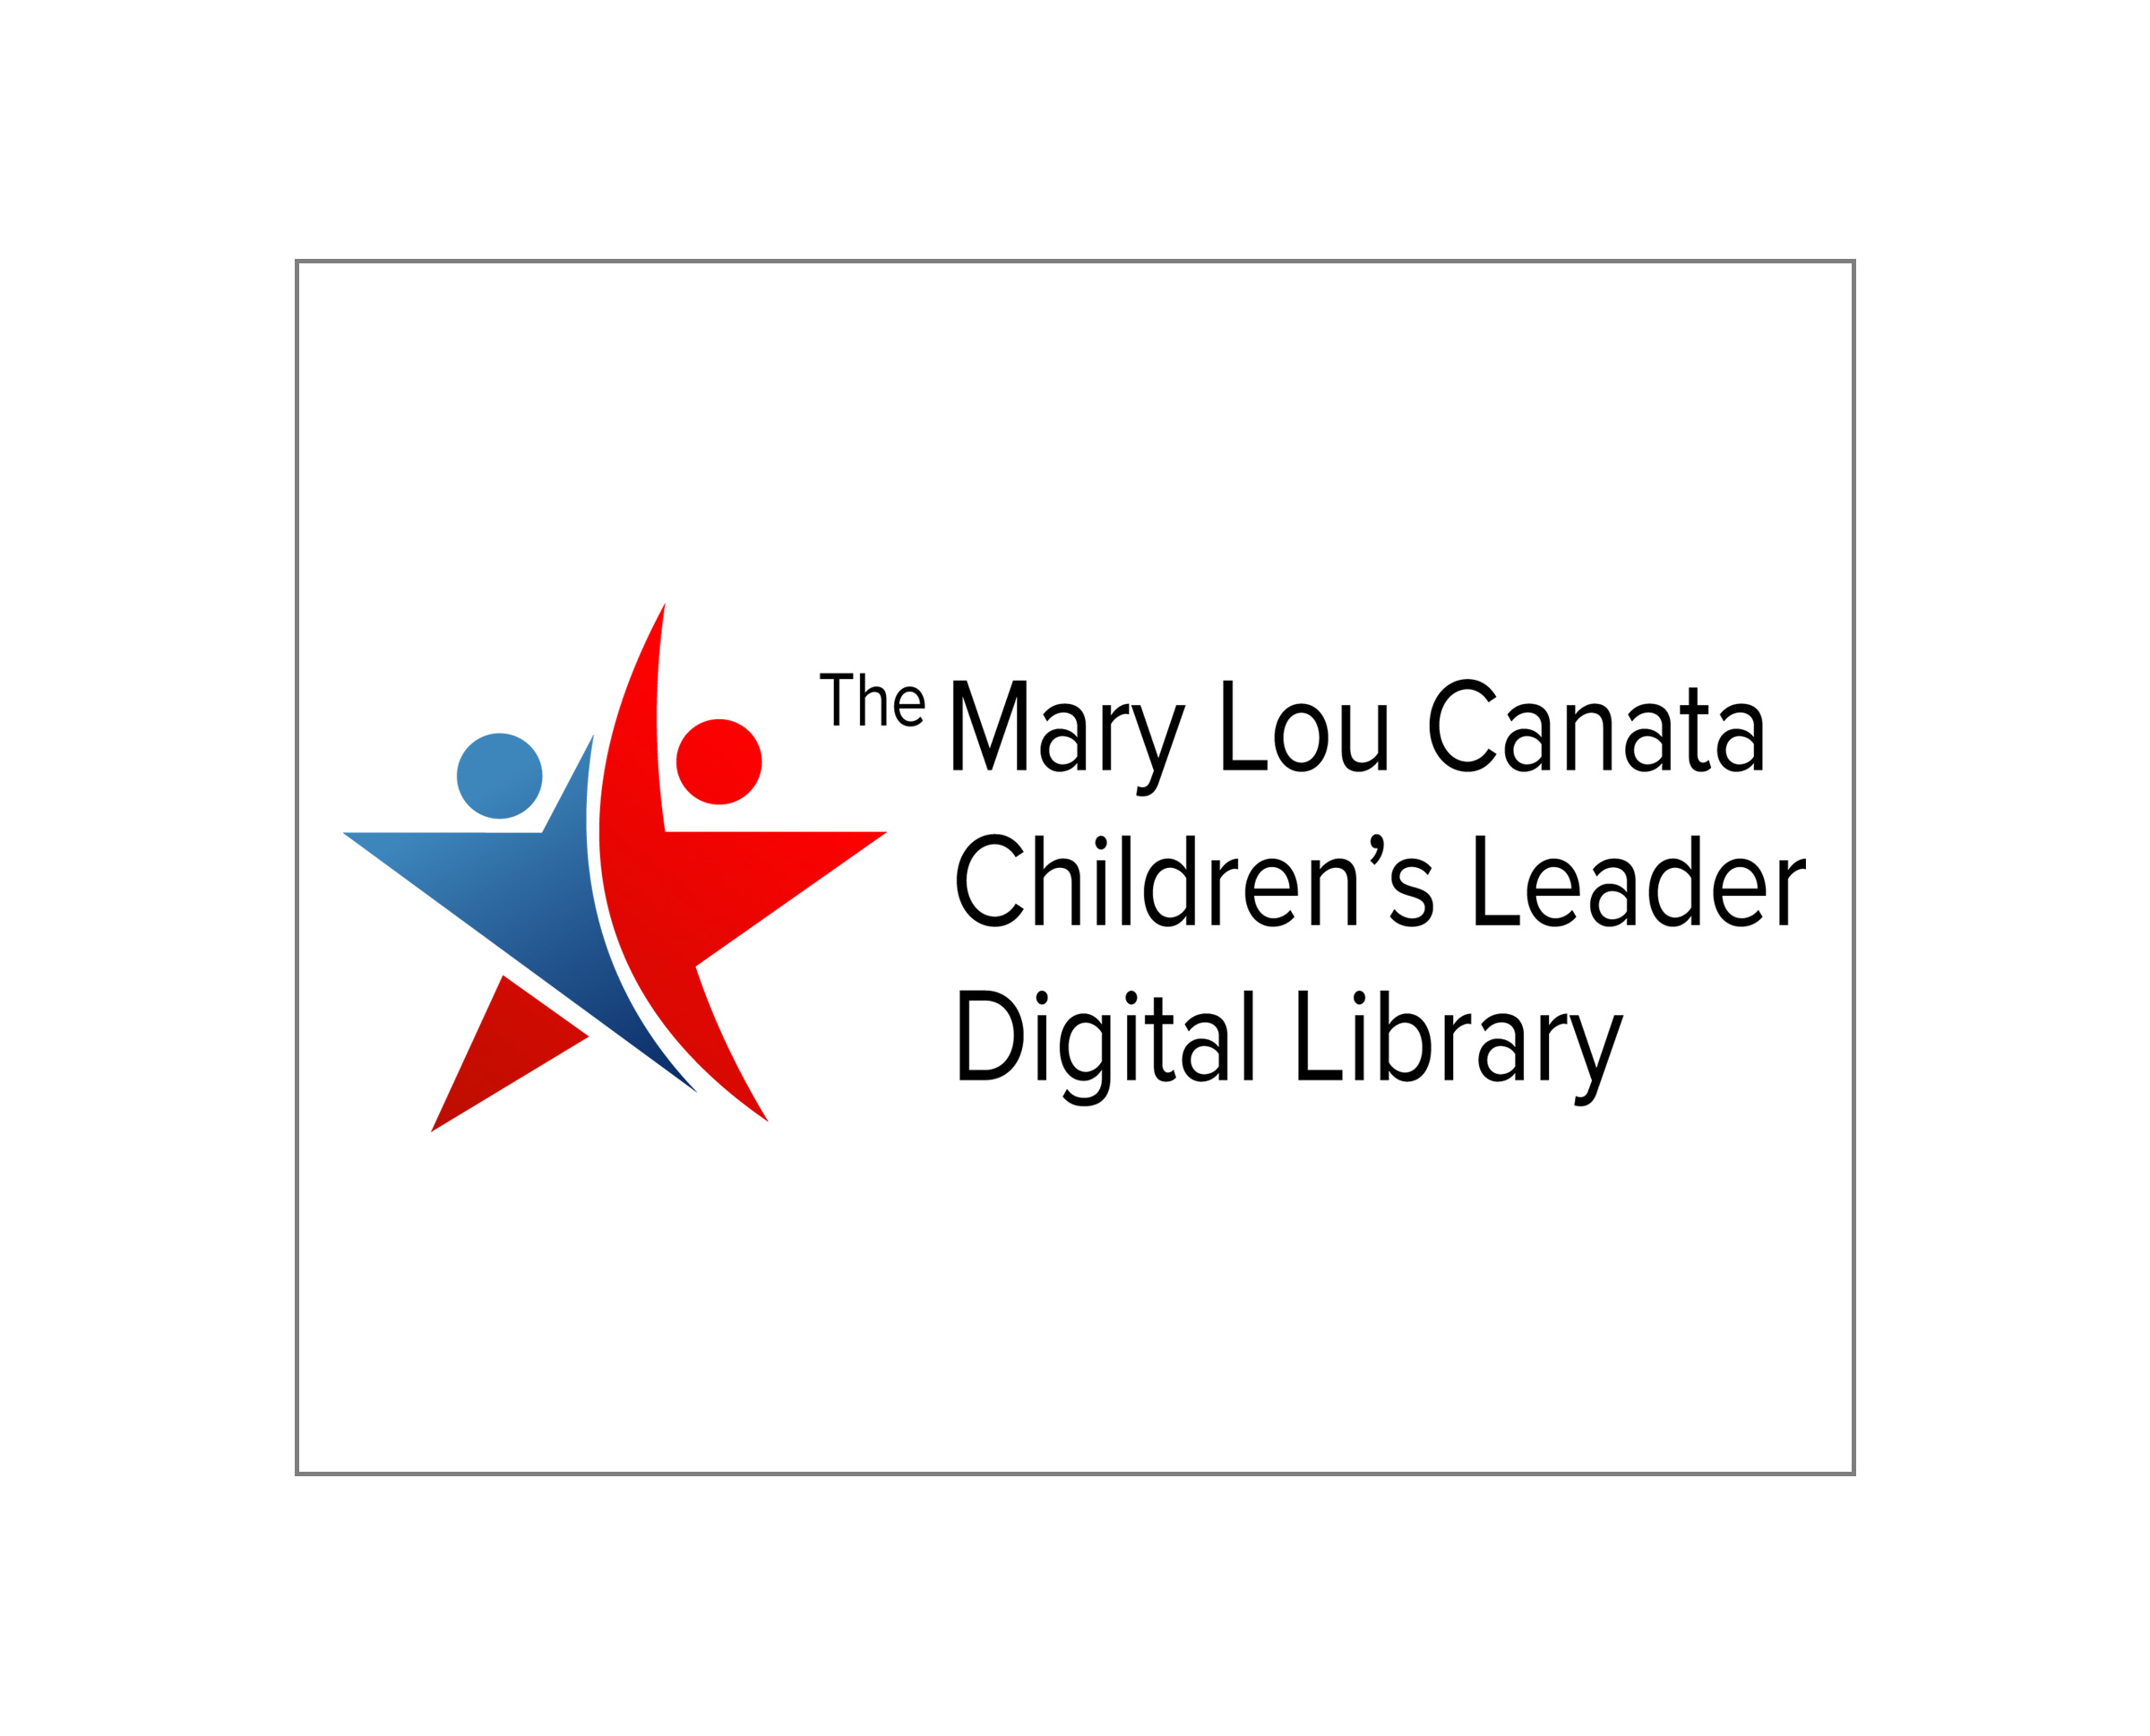 The MLC Children's Leader Digital Library